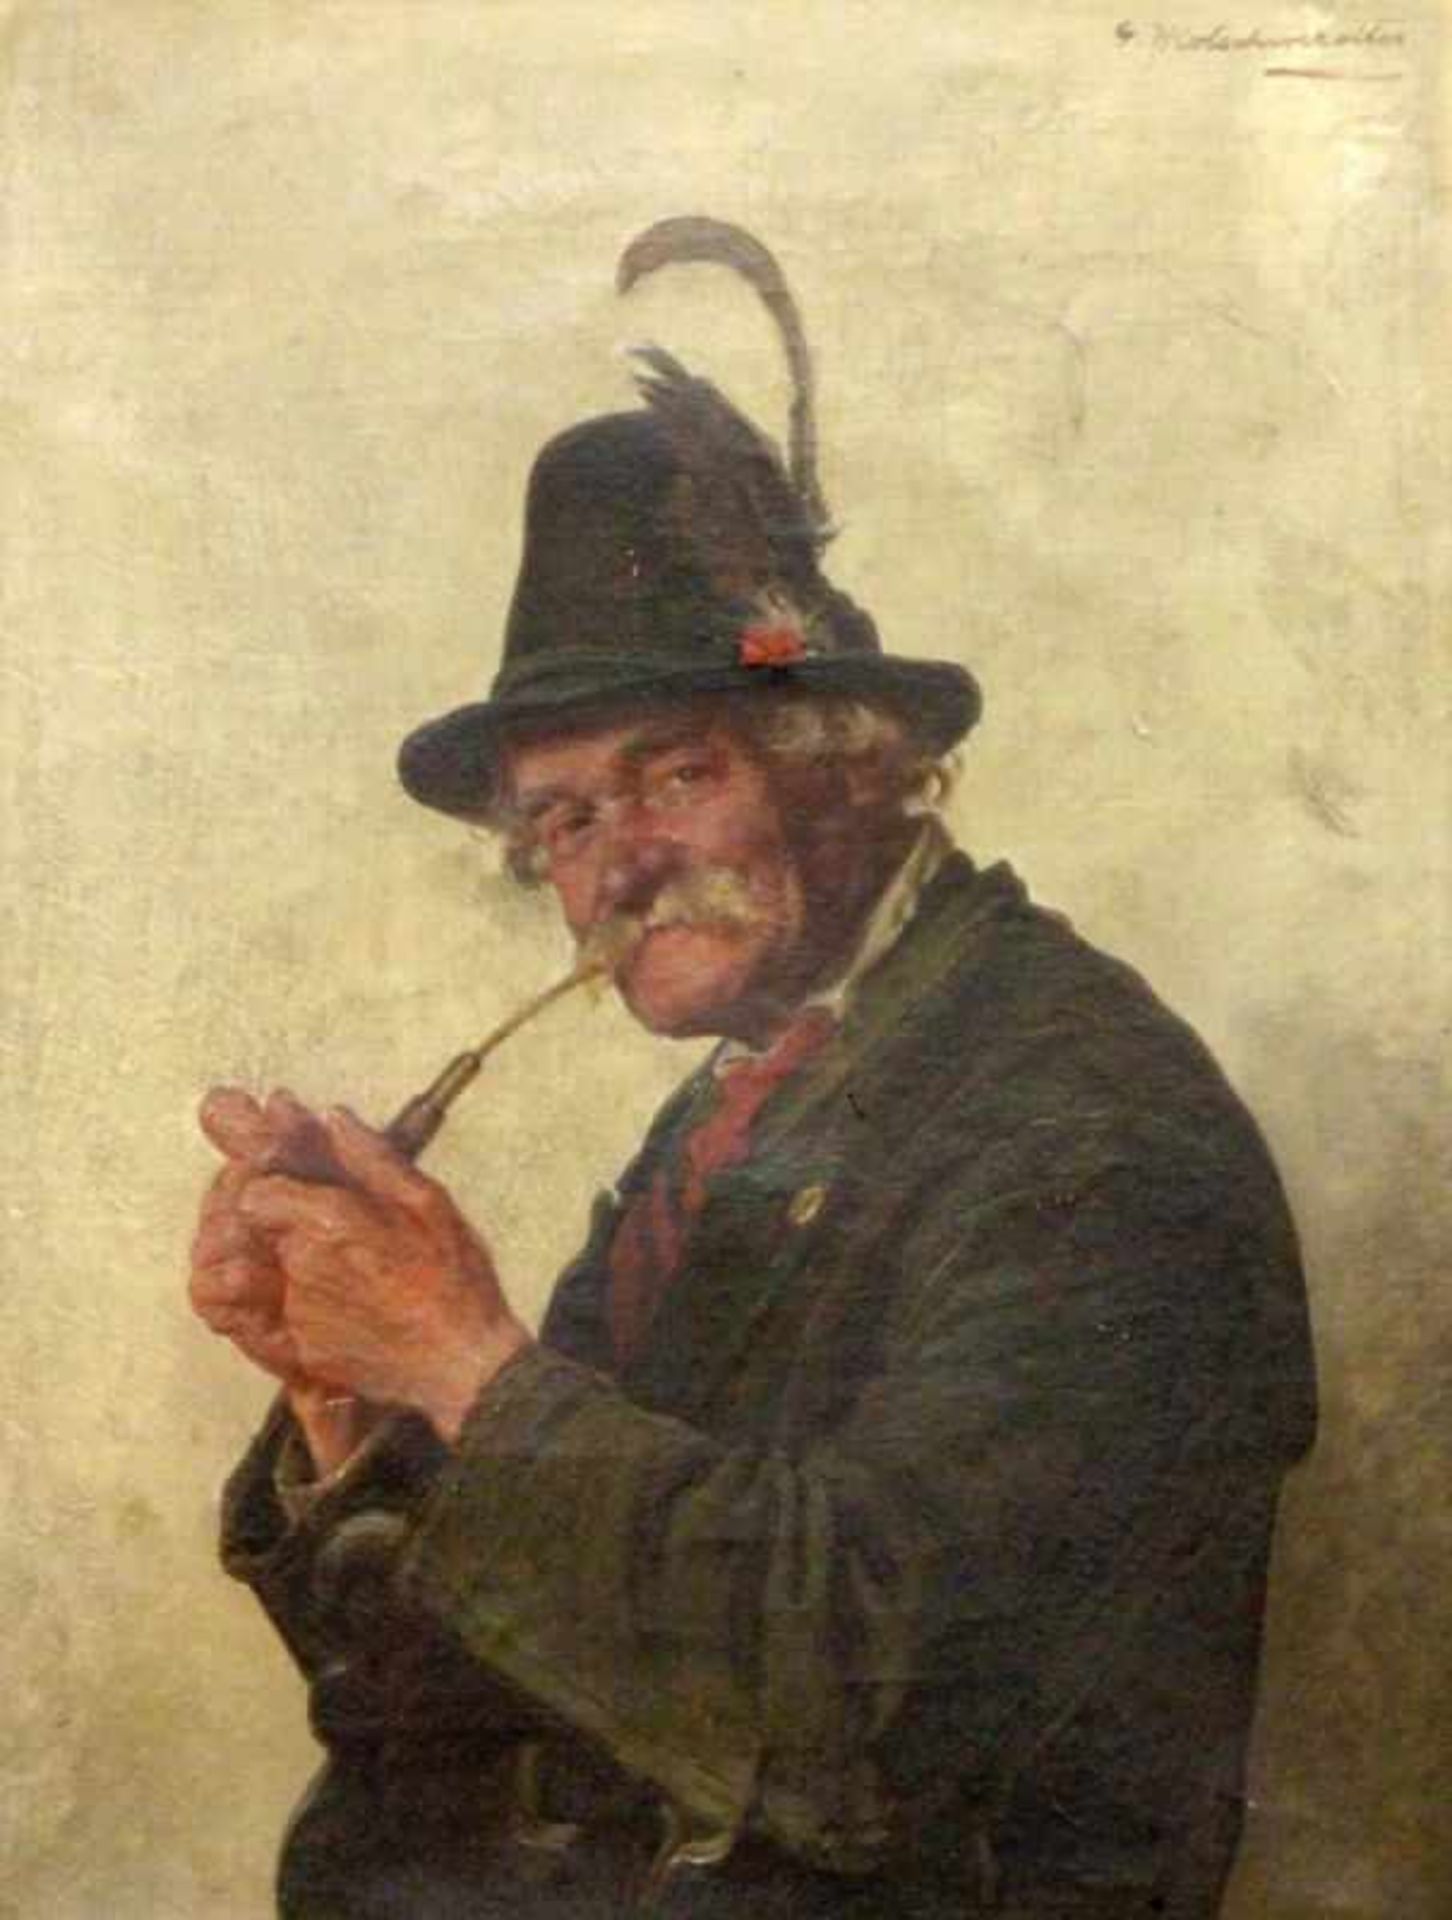 KOTSCHENREITER, HUGO Hof 1854 - 1908 München A Hunter Smoking a Pipe. Oil on canvas,signed. 28 x